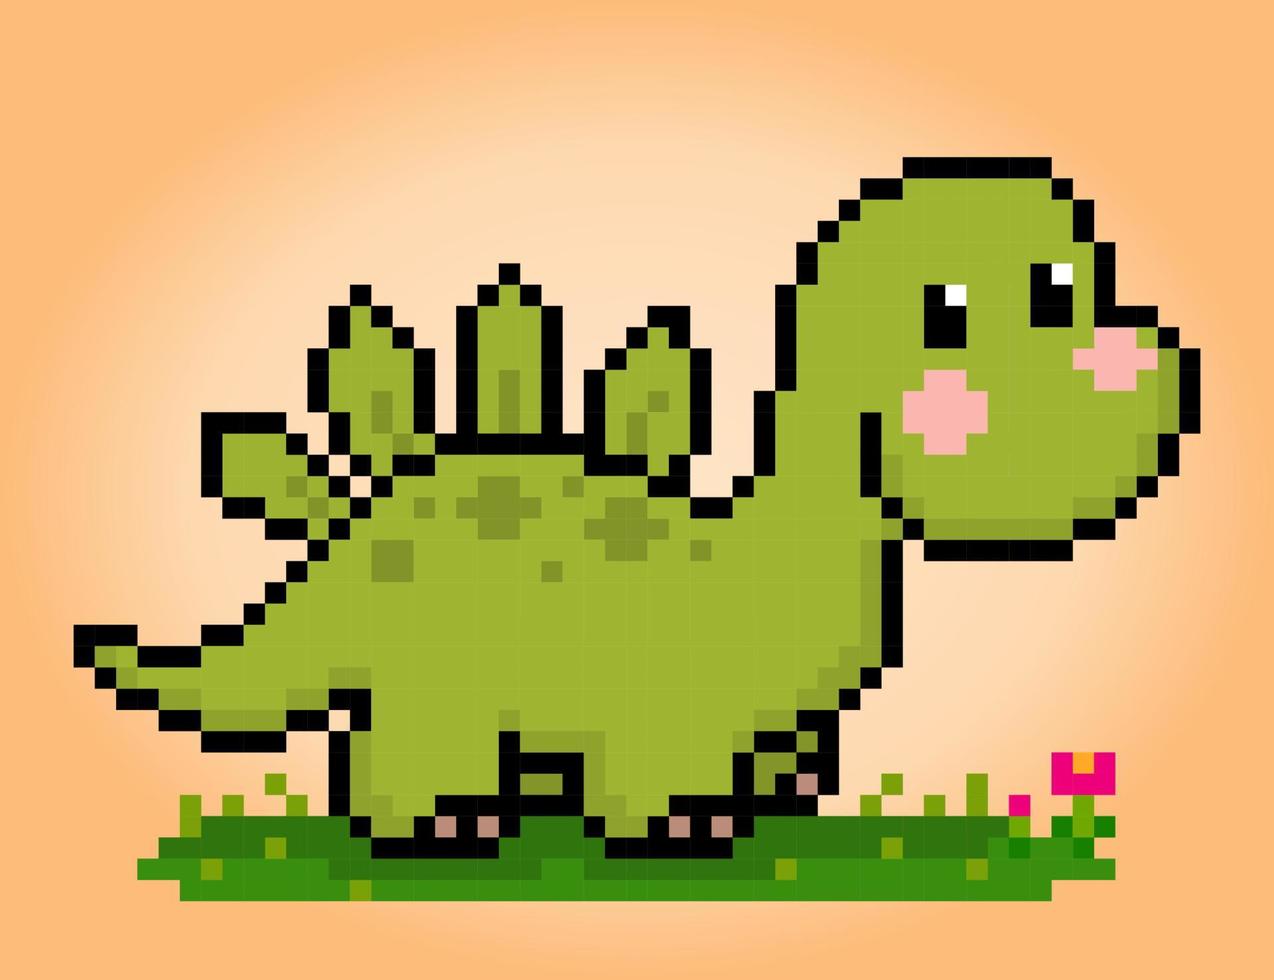 8 bit pixels dinosaur Stegosaurus. Animals in vector illustrations for Cross Stitch patterns.